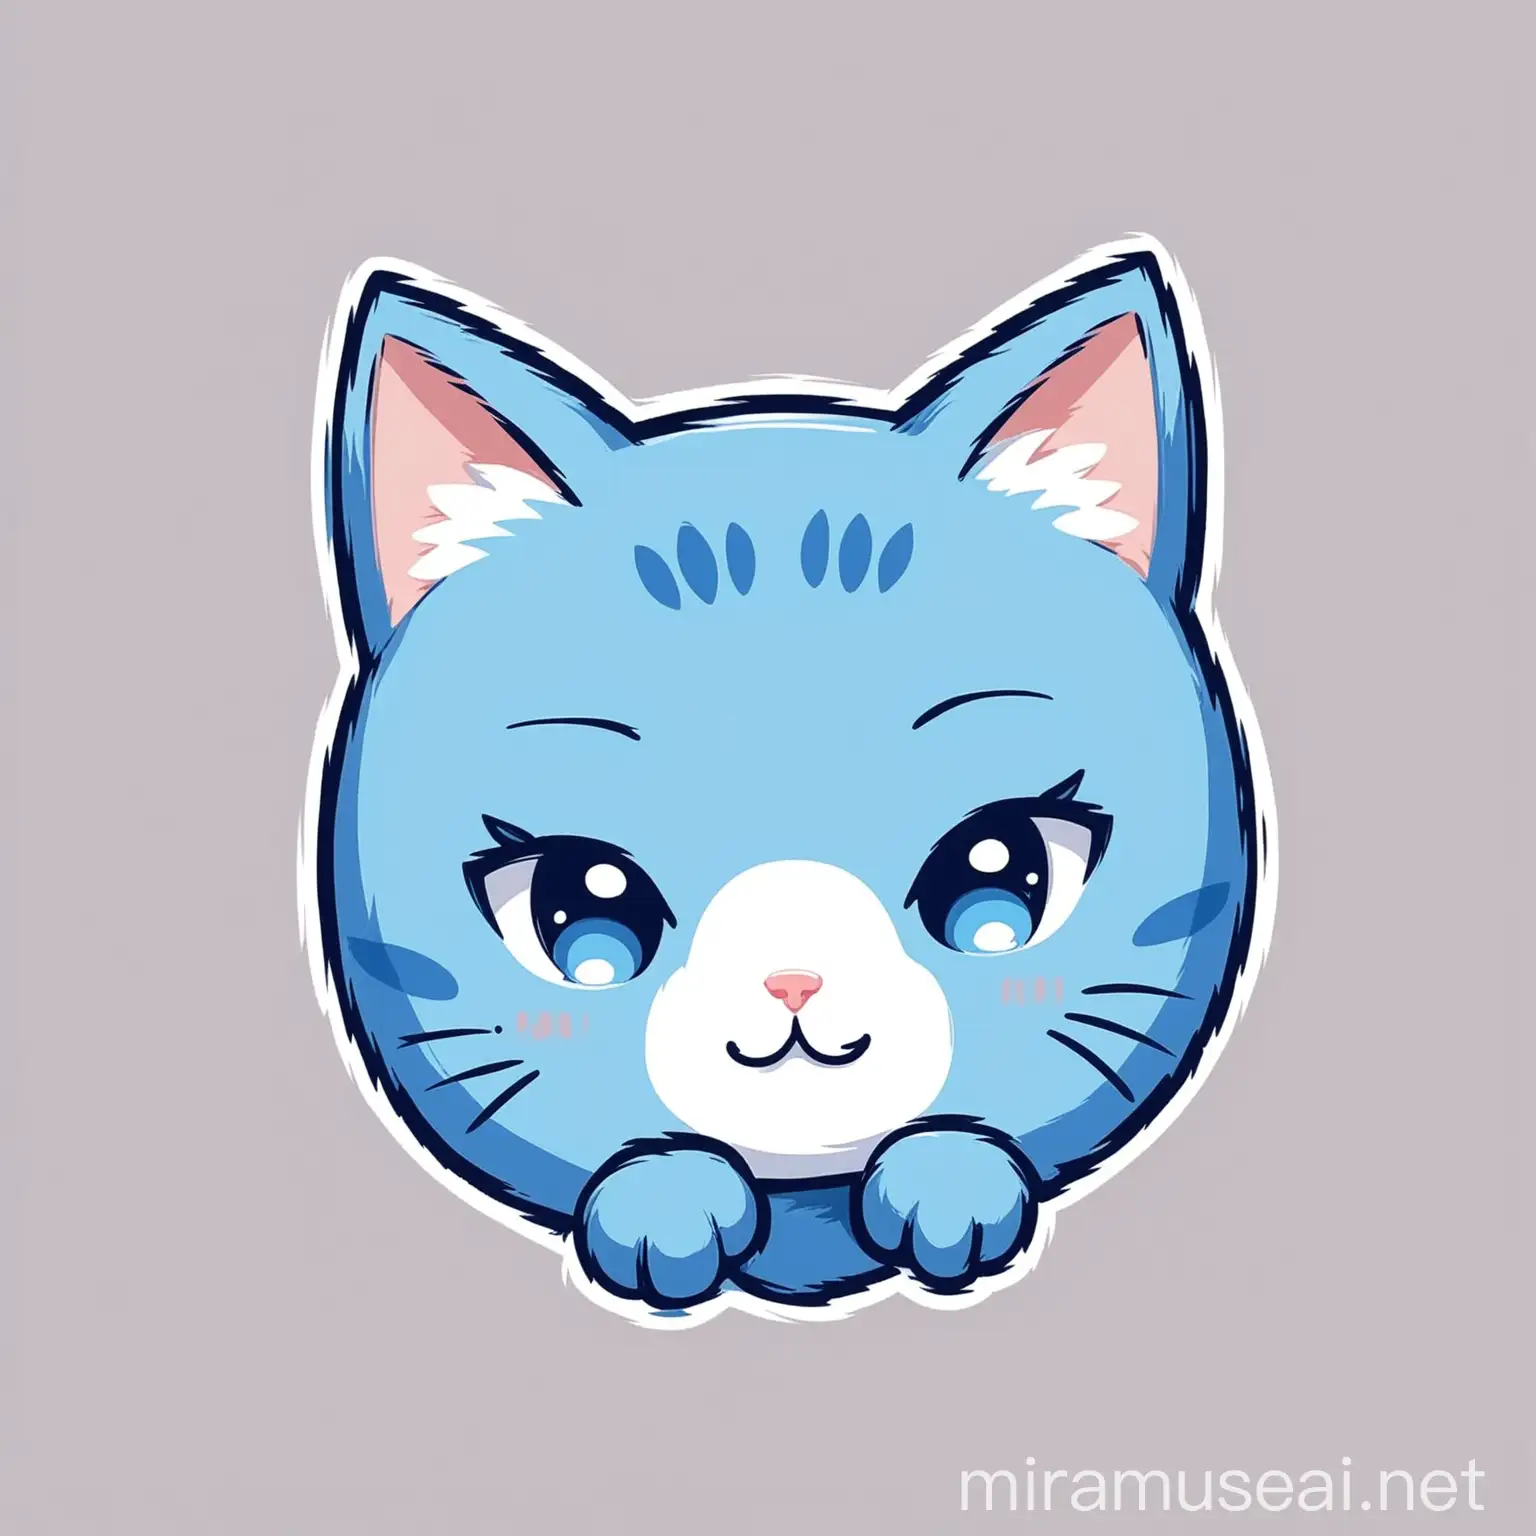 a cute blue cat make as logo 